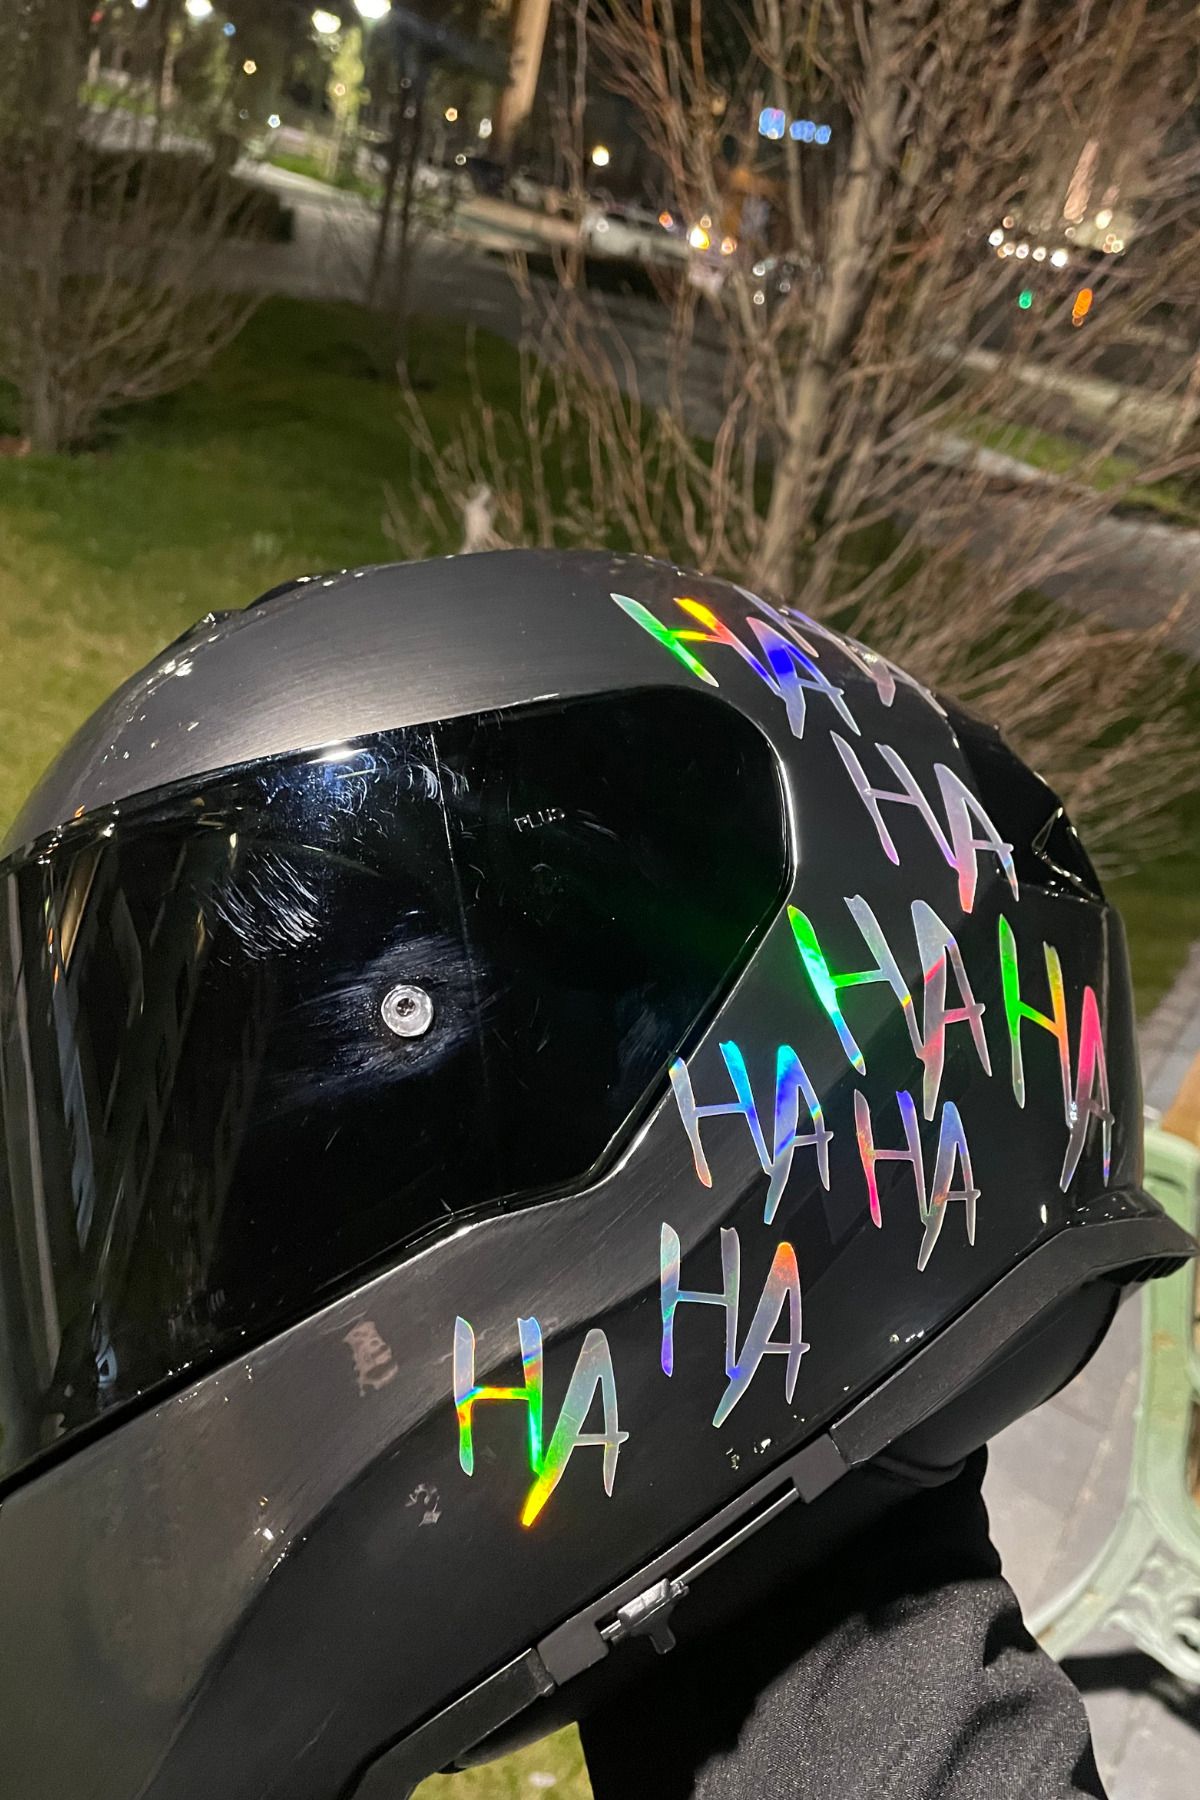 Banxtre Dekoratif Hologramlı Hahaha Sticker Motor-araba-kask Için Etiket 15cmx30cm (1 ADET)